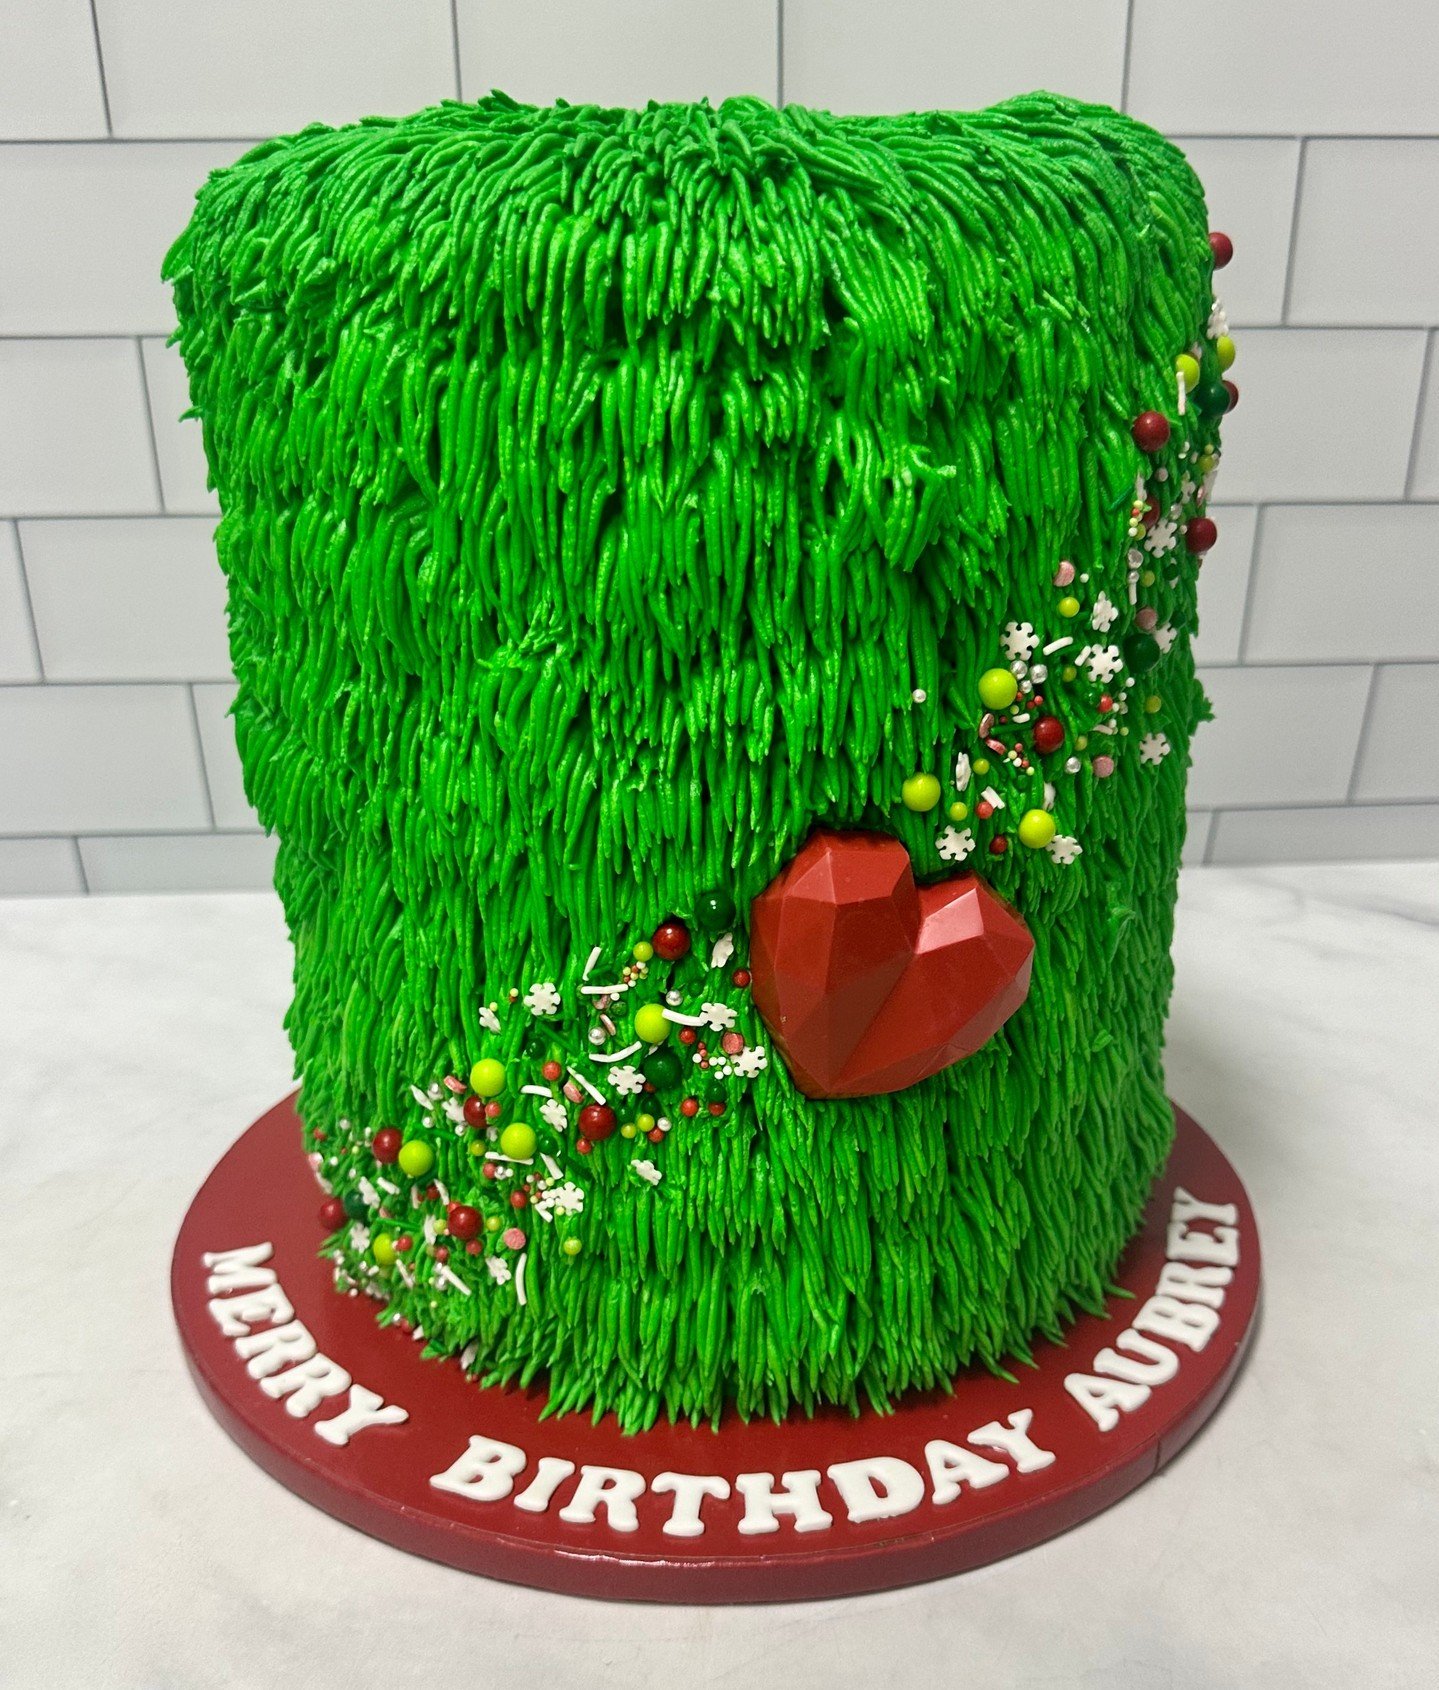 They say the Grinch Cake's heart grew 3 sizes that day 💗

#grinchcake #kupcakekitchen #wantcake #grinchparty #instacake #cakegram #birthdaycakeideas #birthdaypartyideas #birthdayinspiration #birthdayideasforkids #cakedesigner #designercakes #customc